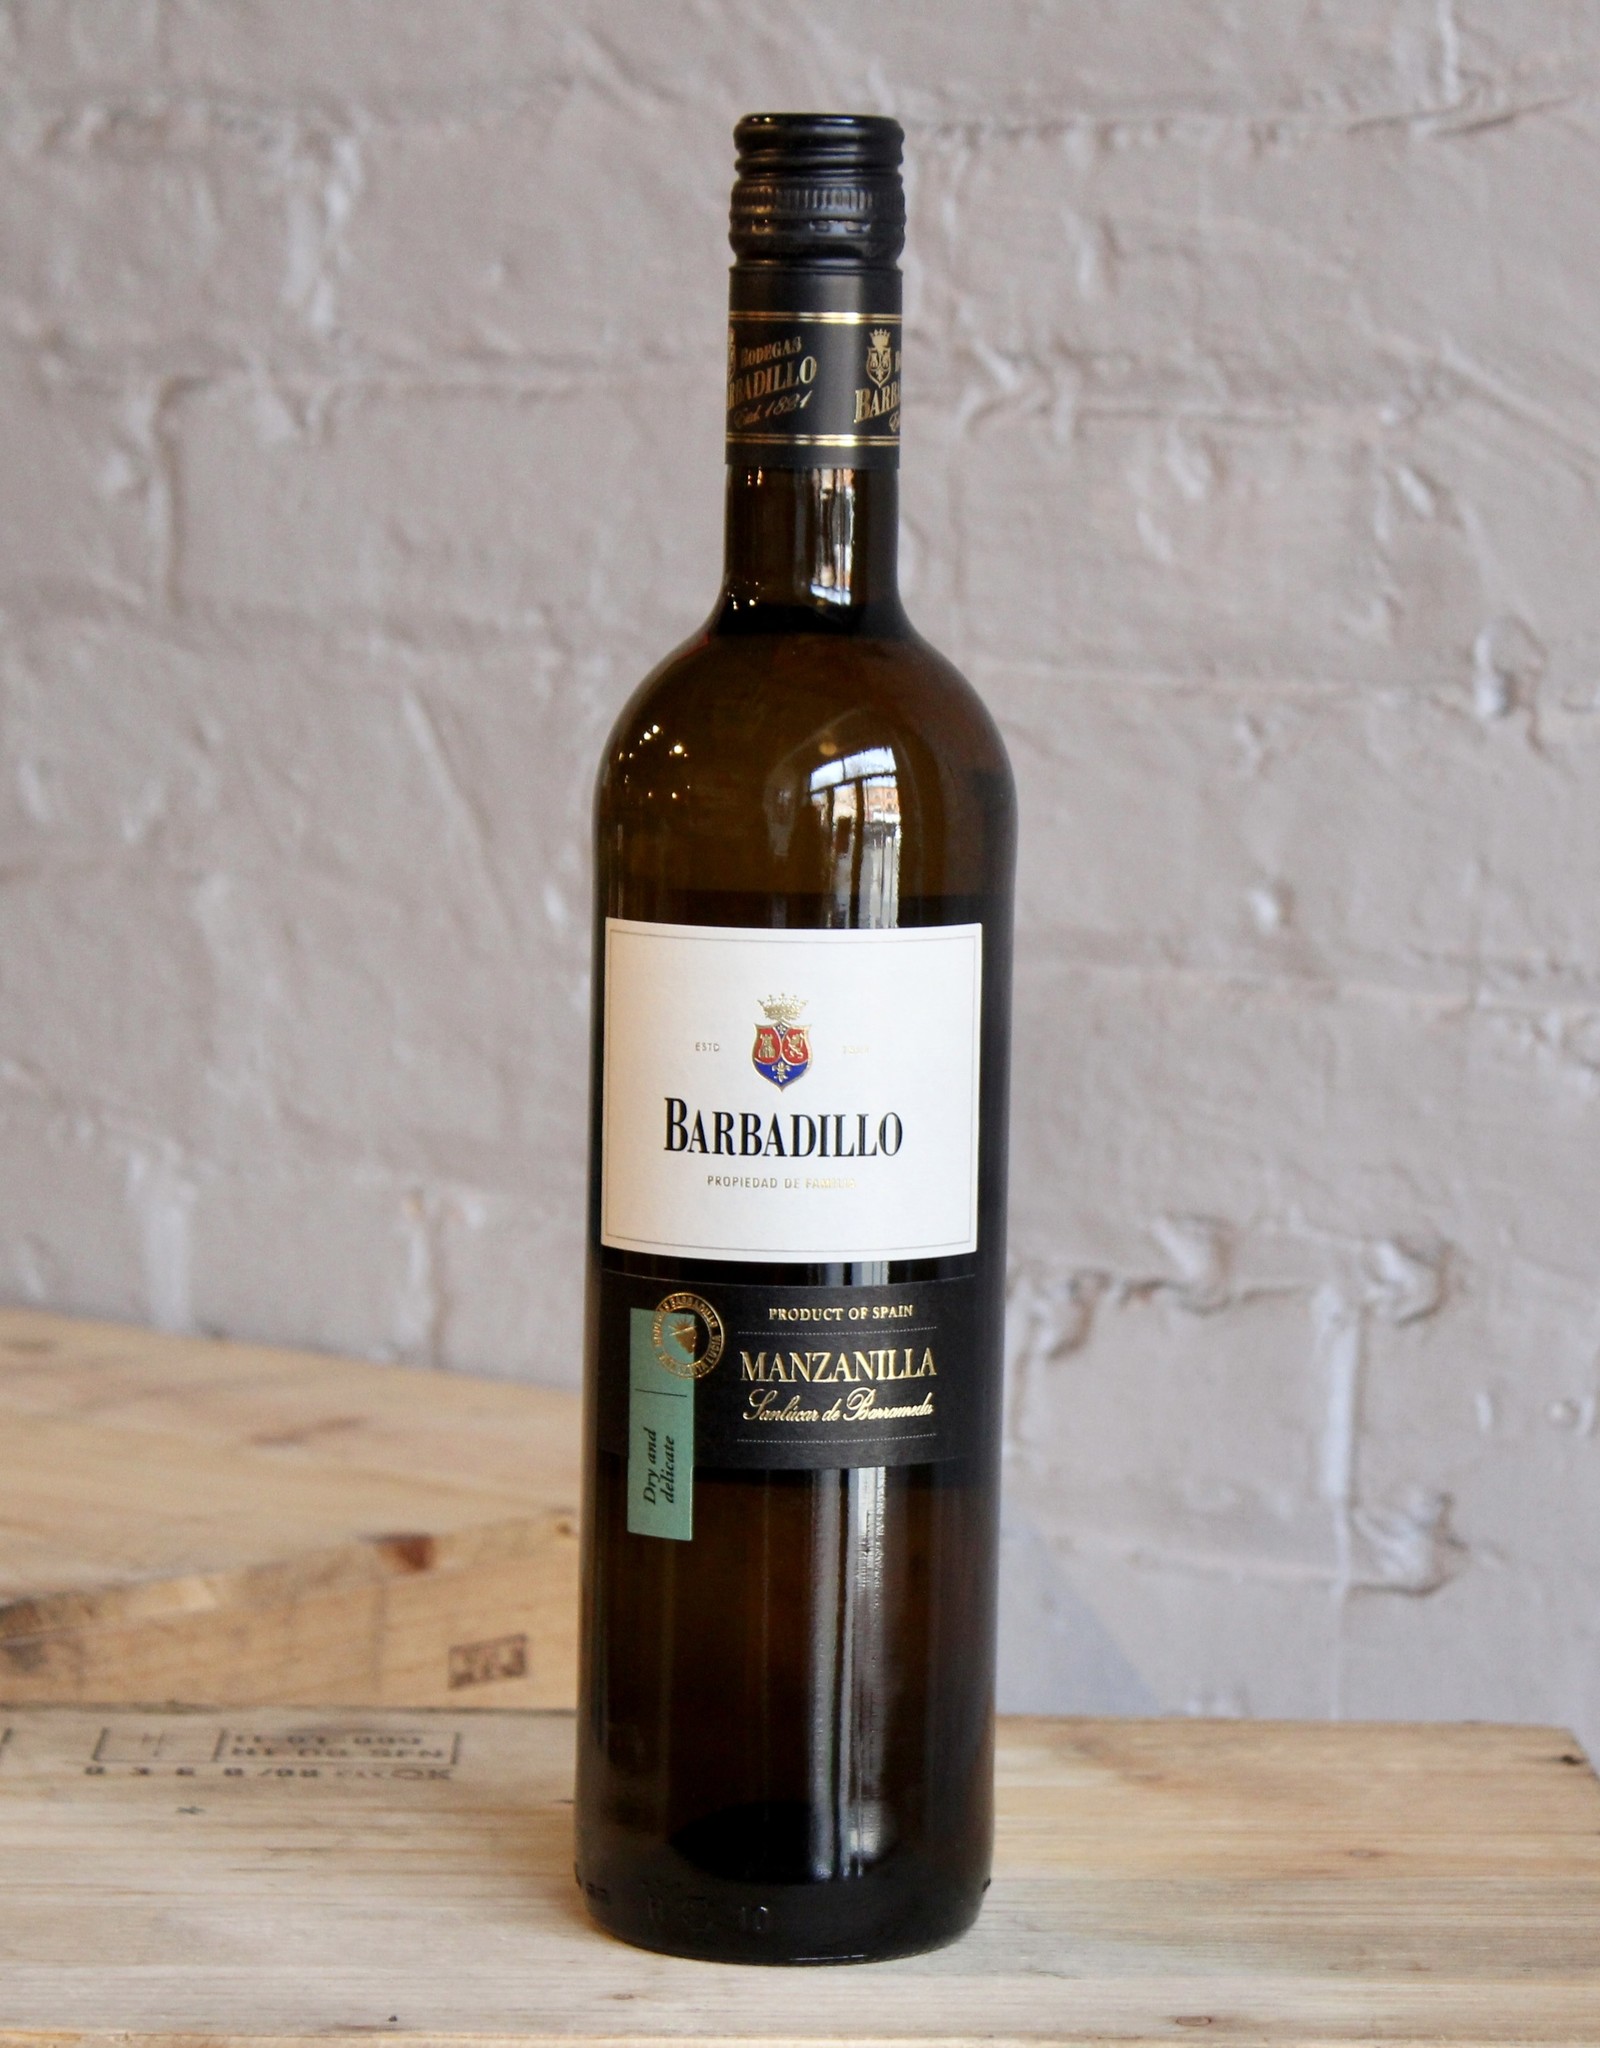 Wine NV Barbadillo Manzanilla Extra Dry Sherry - Sanlucar de Barrameda, Jerez, Spain (750ml)